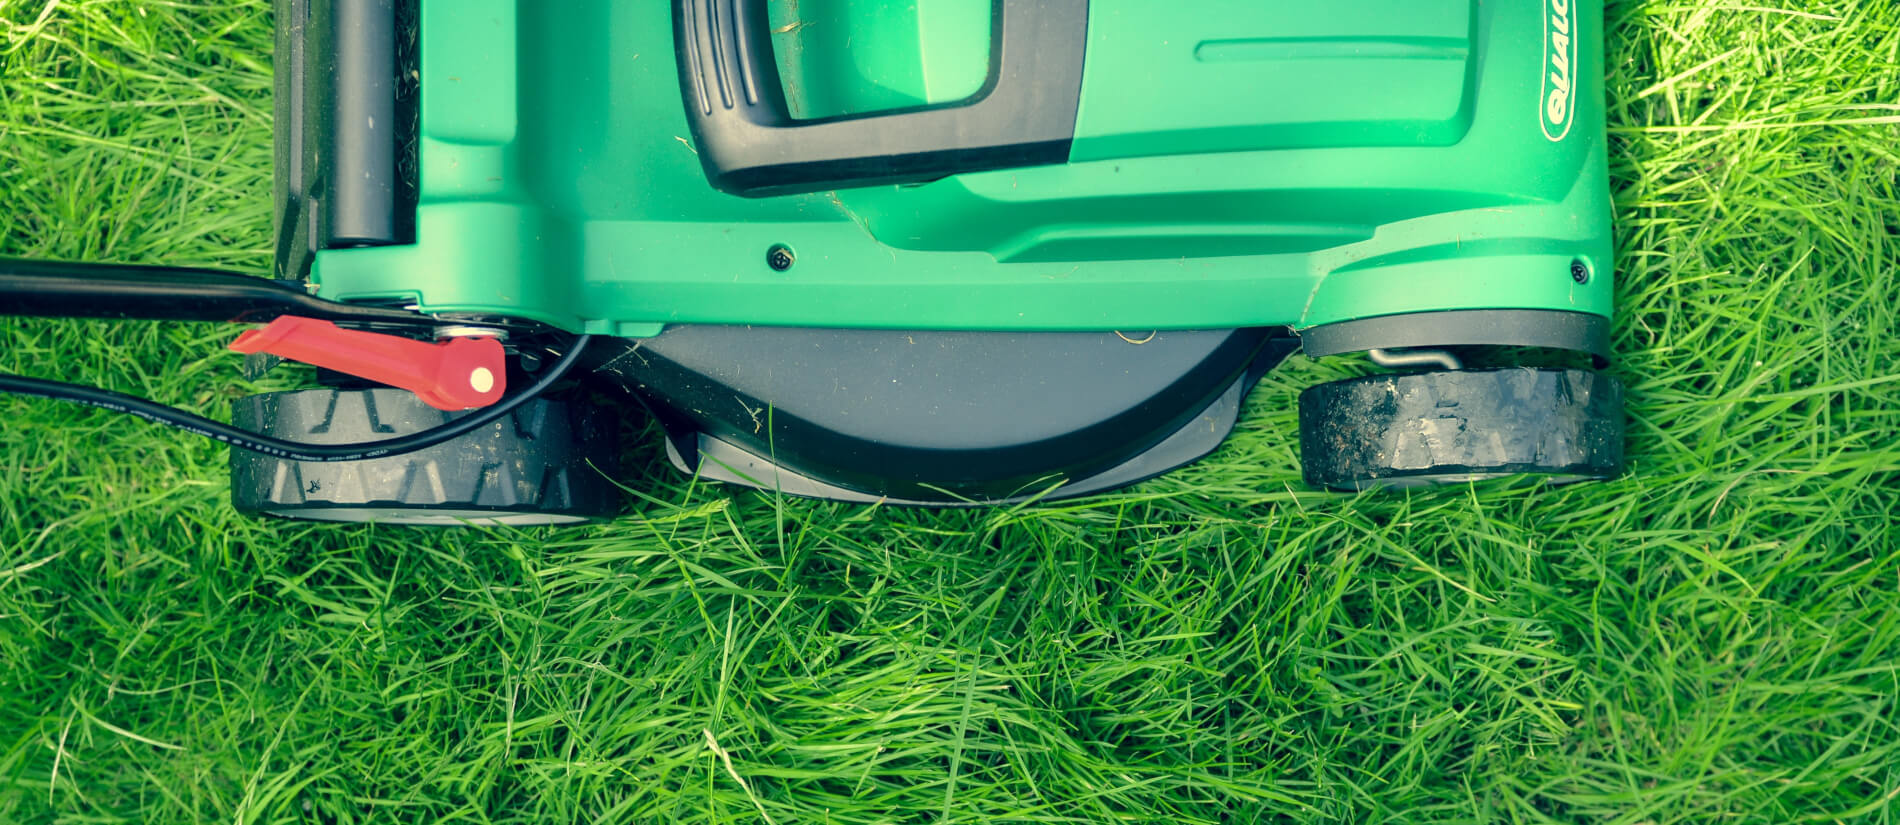 Aerial view of a green lawn mower cutting grass